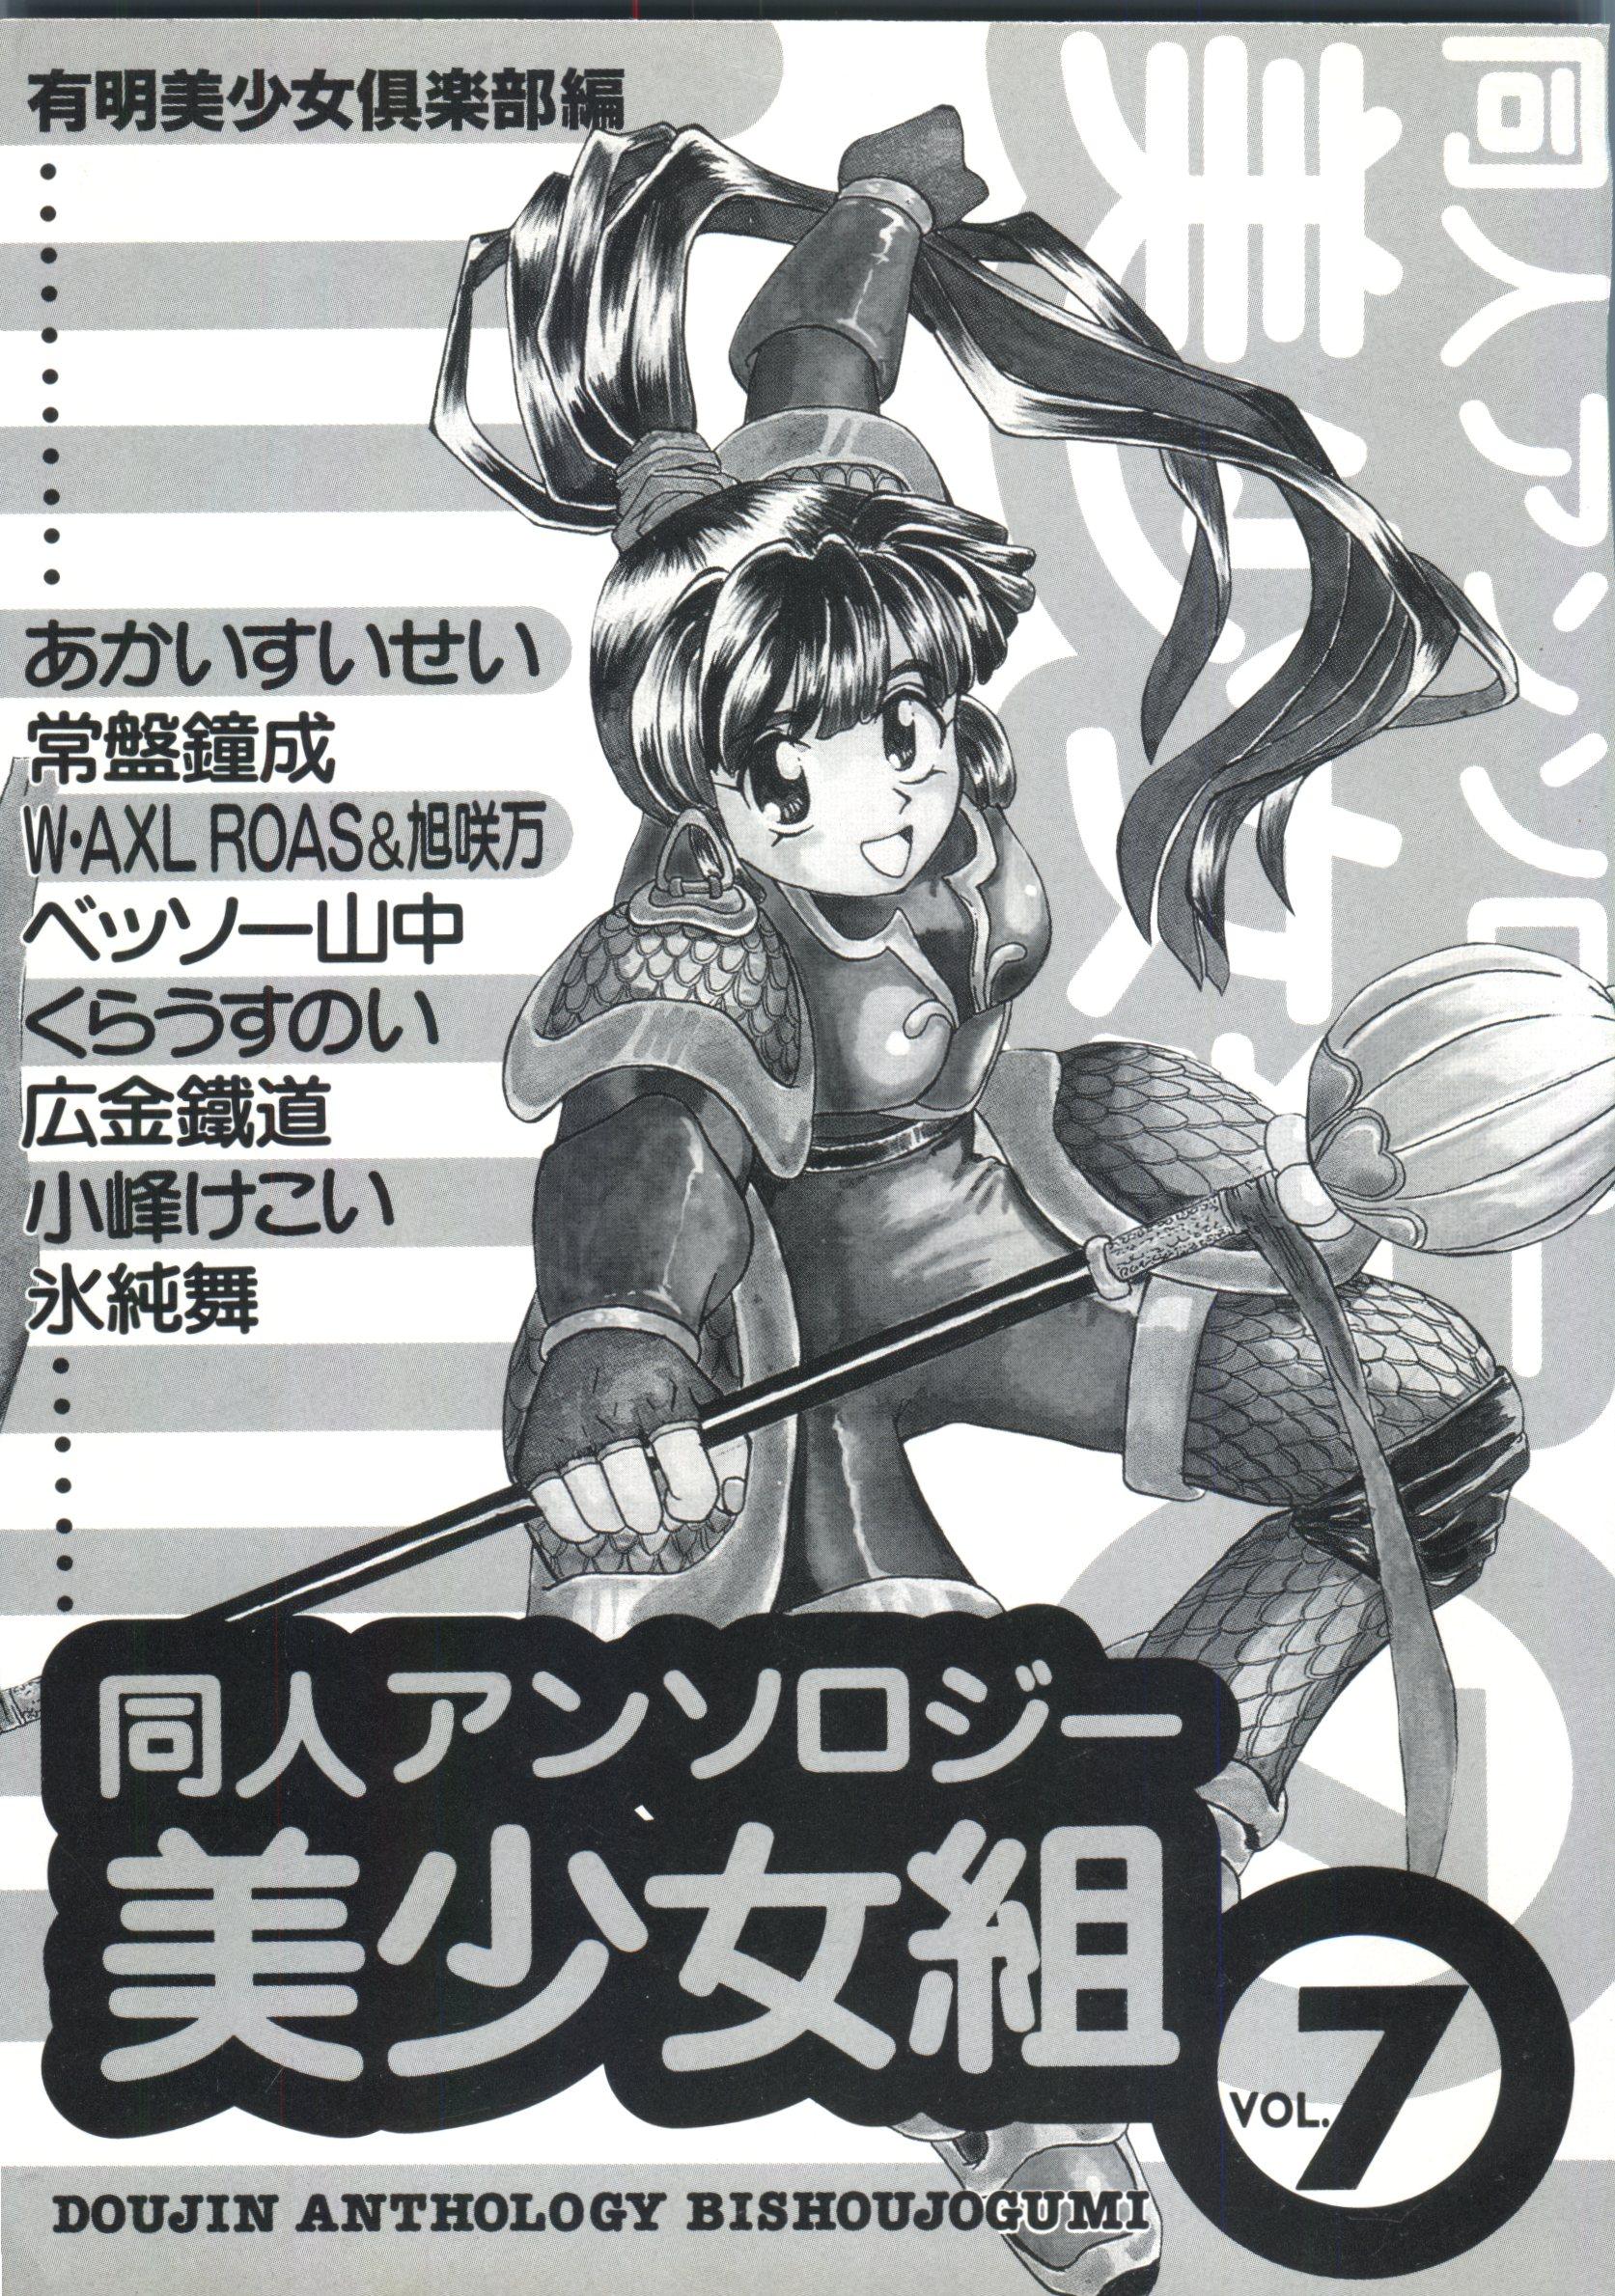 Sentando Doujin Anthology Bishoujo Gumi 7 - Neon genesis evangelion Sailor moon King of fighters Magic knight rayearth Saint tail Weird - Page 4